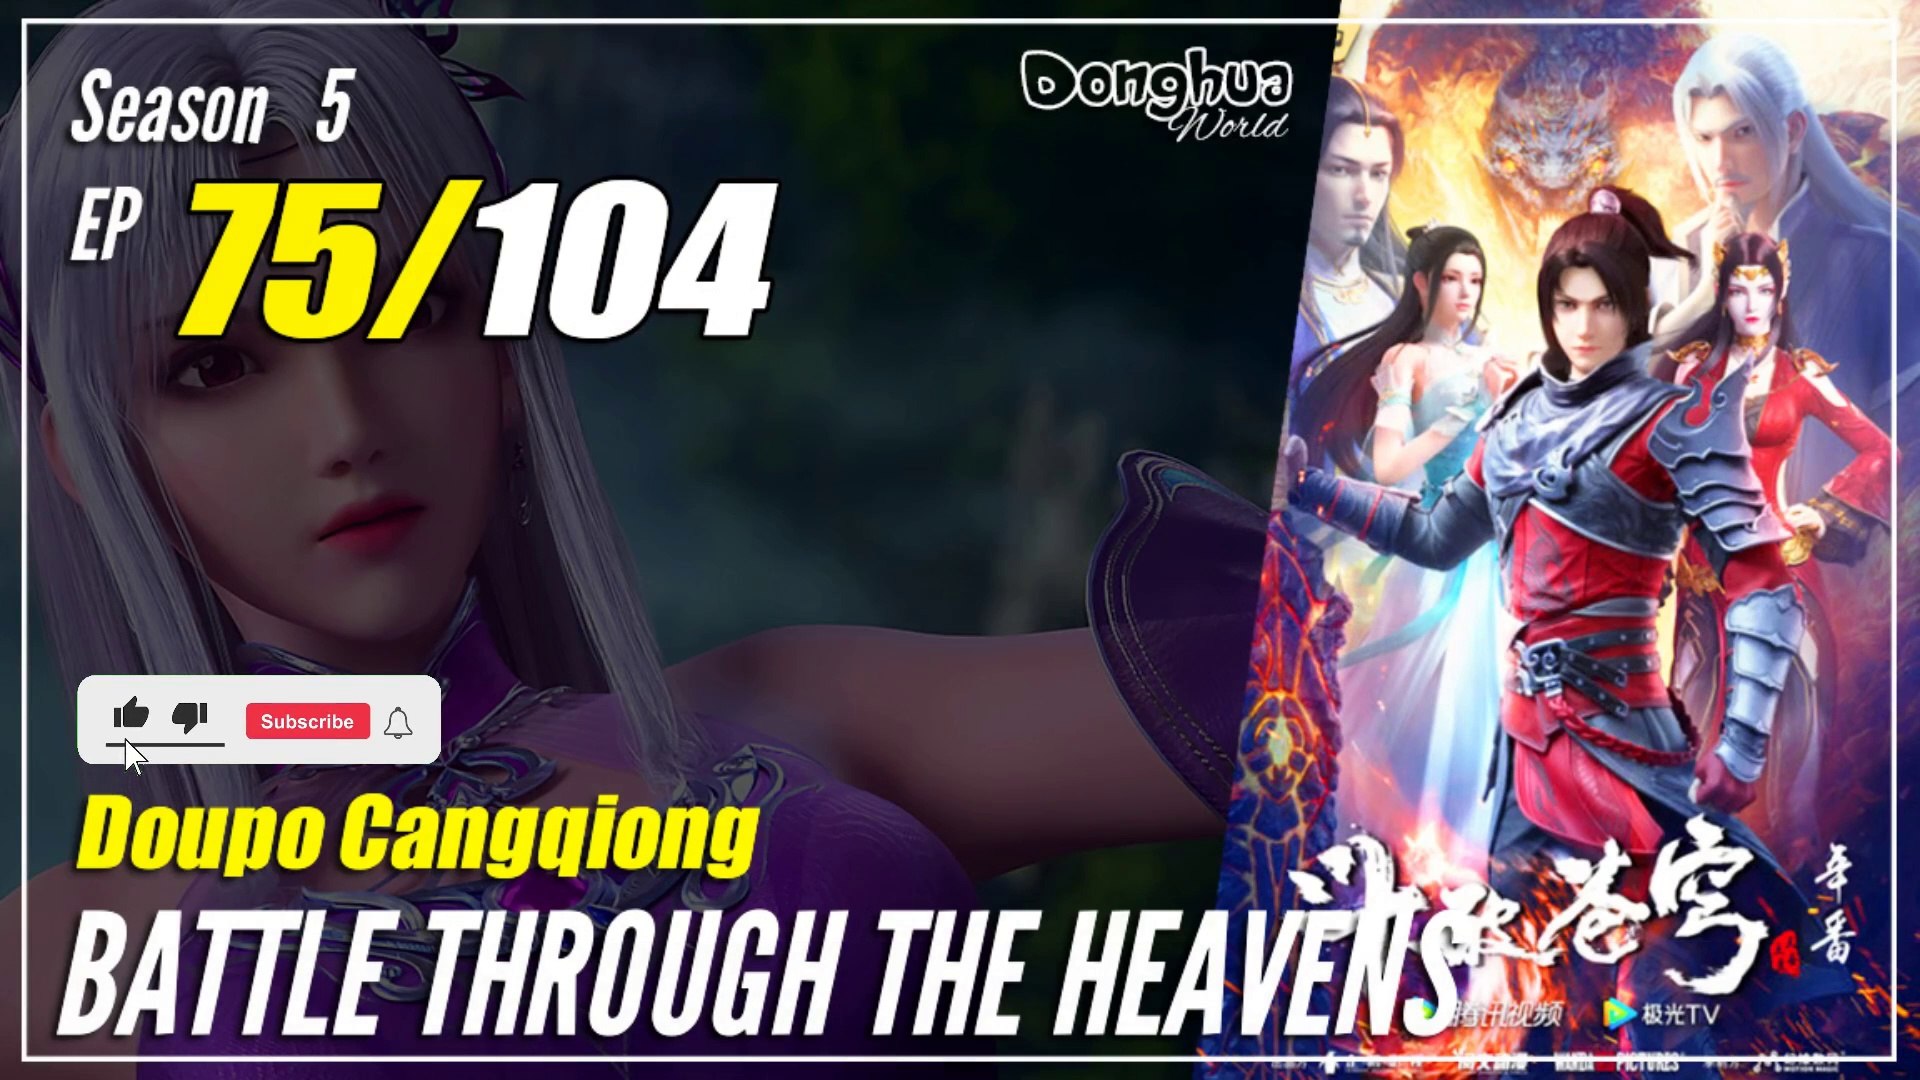 Battle Through The Heavens [Doupo Cangqiong] - Season 05 Ep 37 PREVIEW 